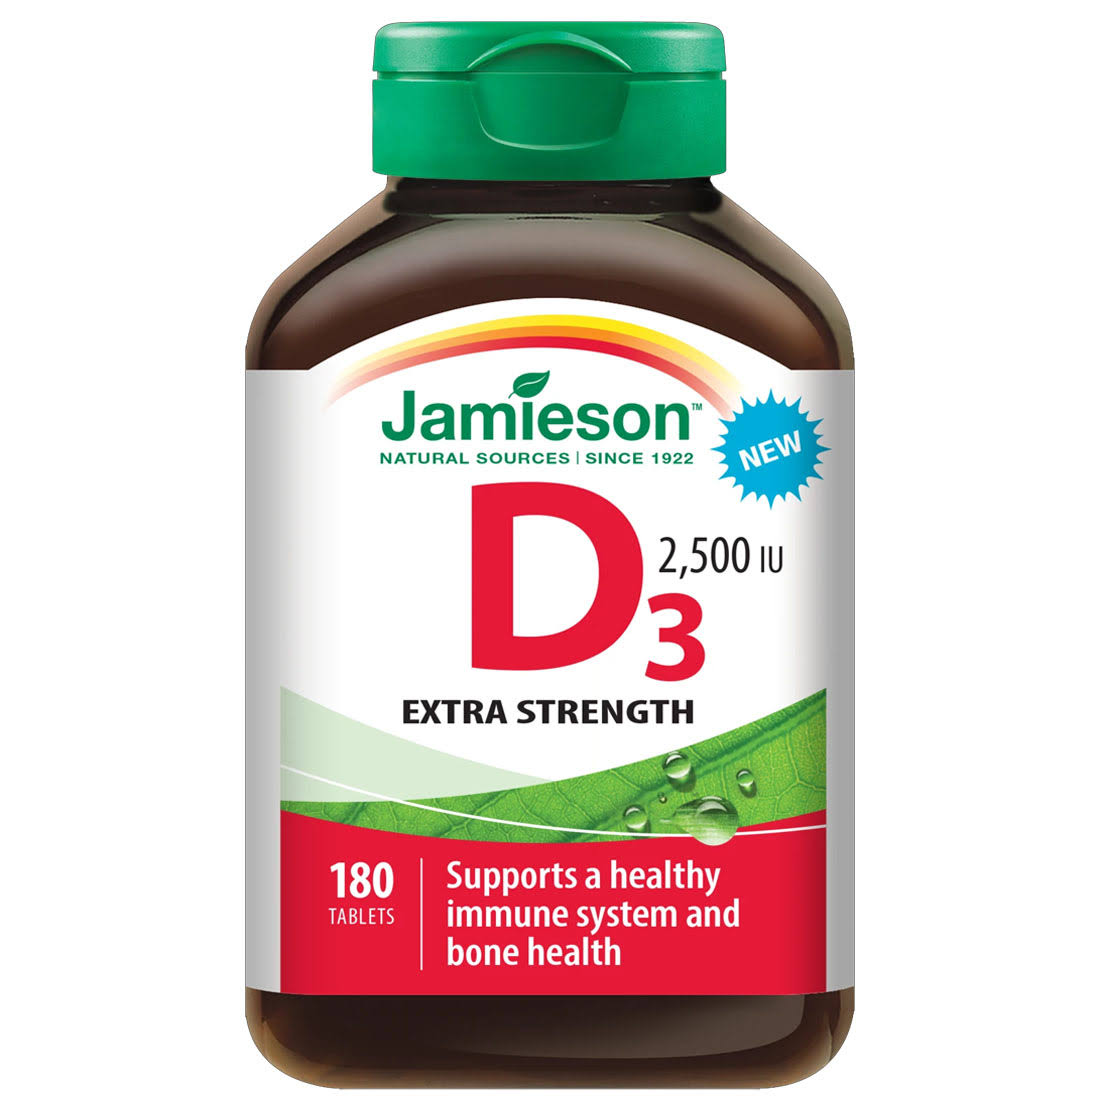 Jamieson Vitamin D3 2500IU Extra Strength 180 Tablets